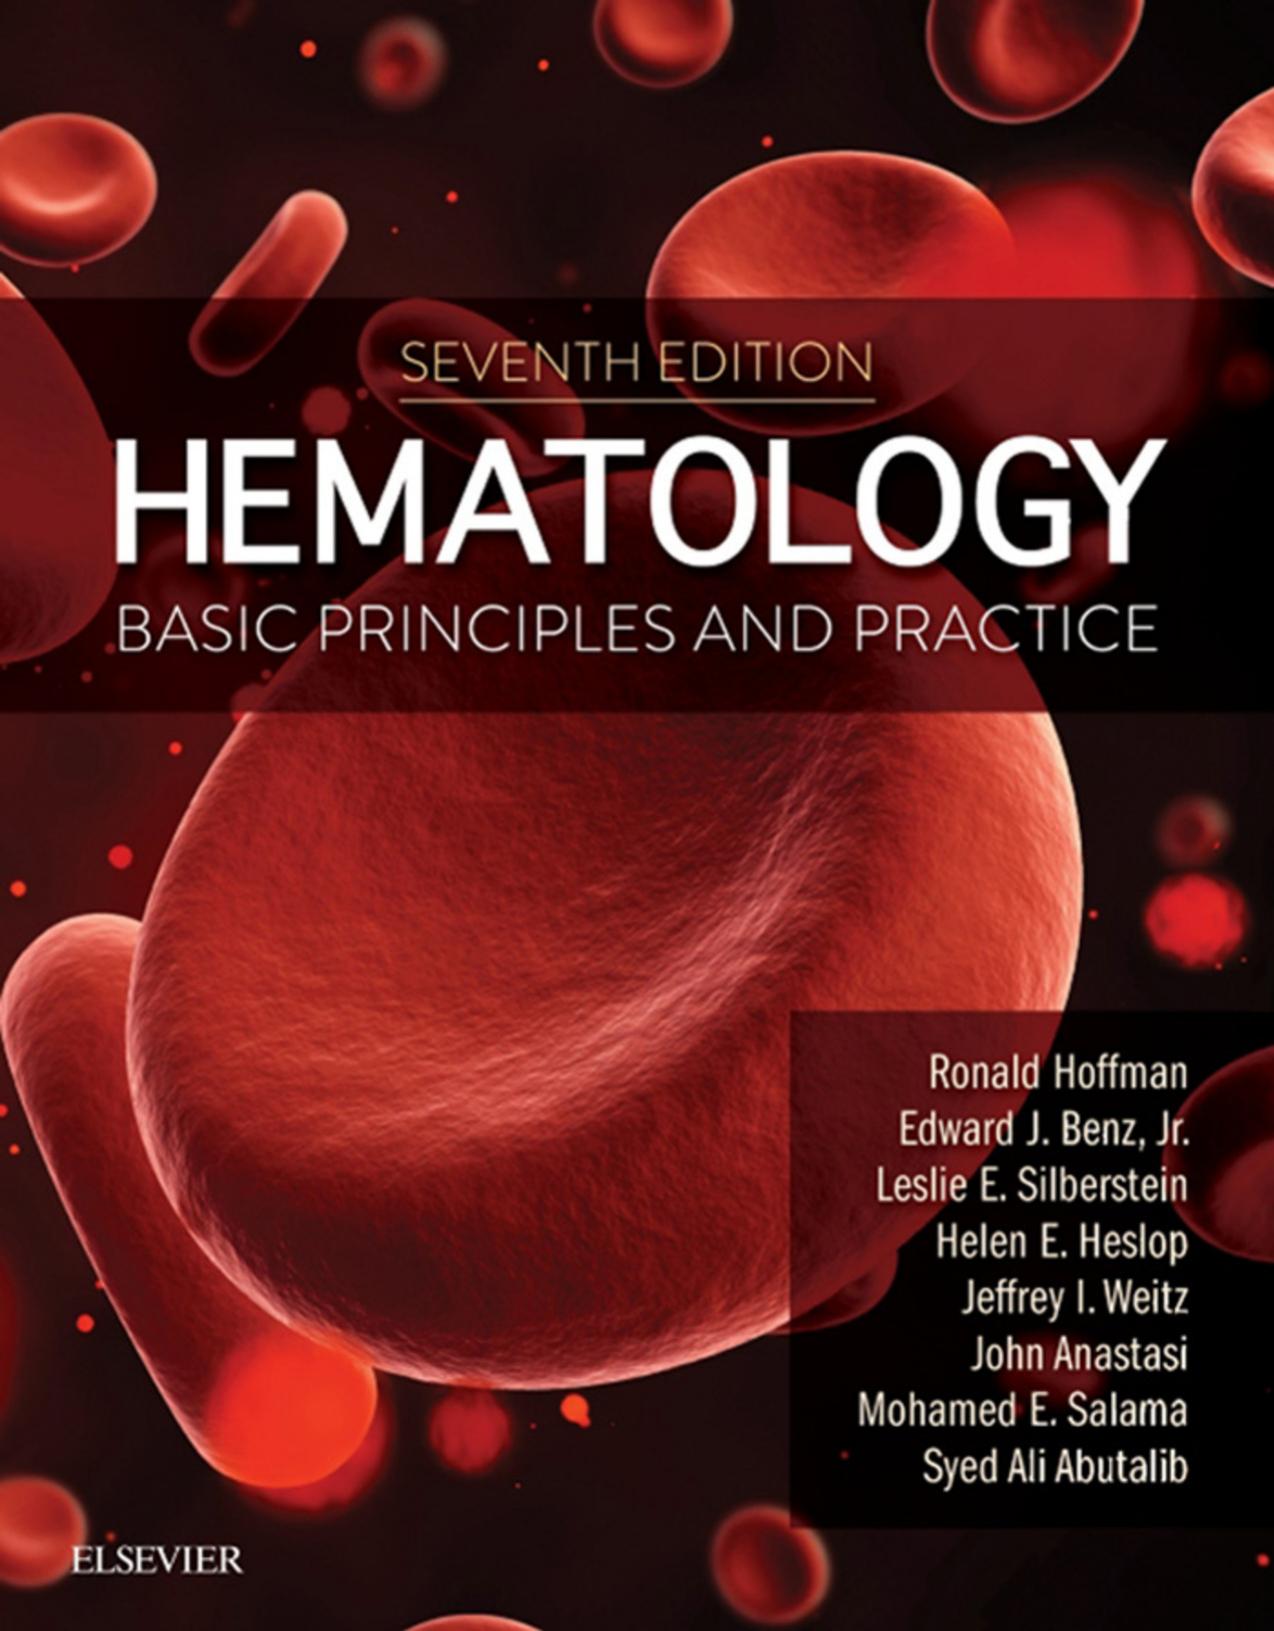 Hematology Basic Principles and Practice 7th.jpg